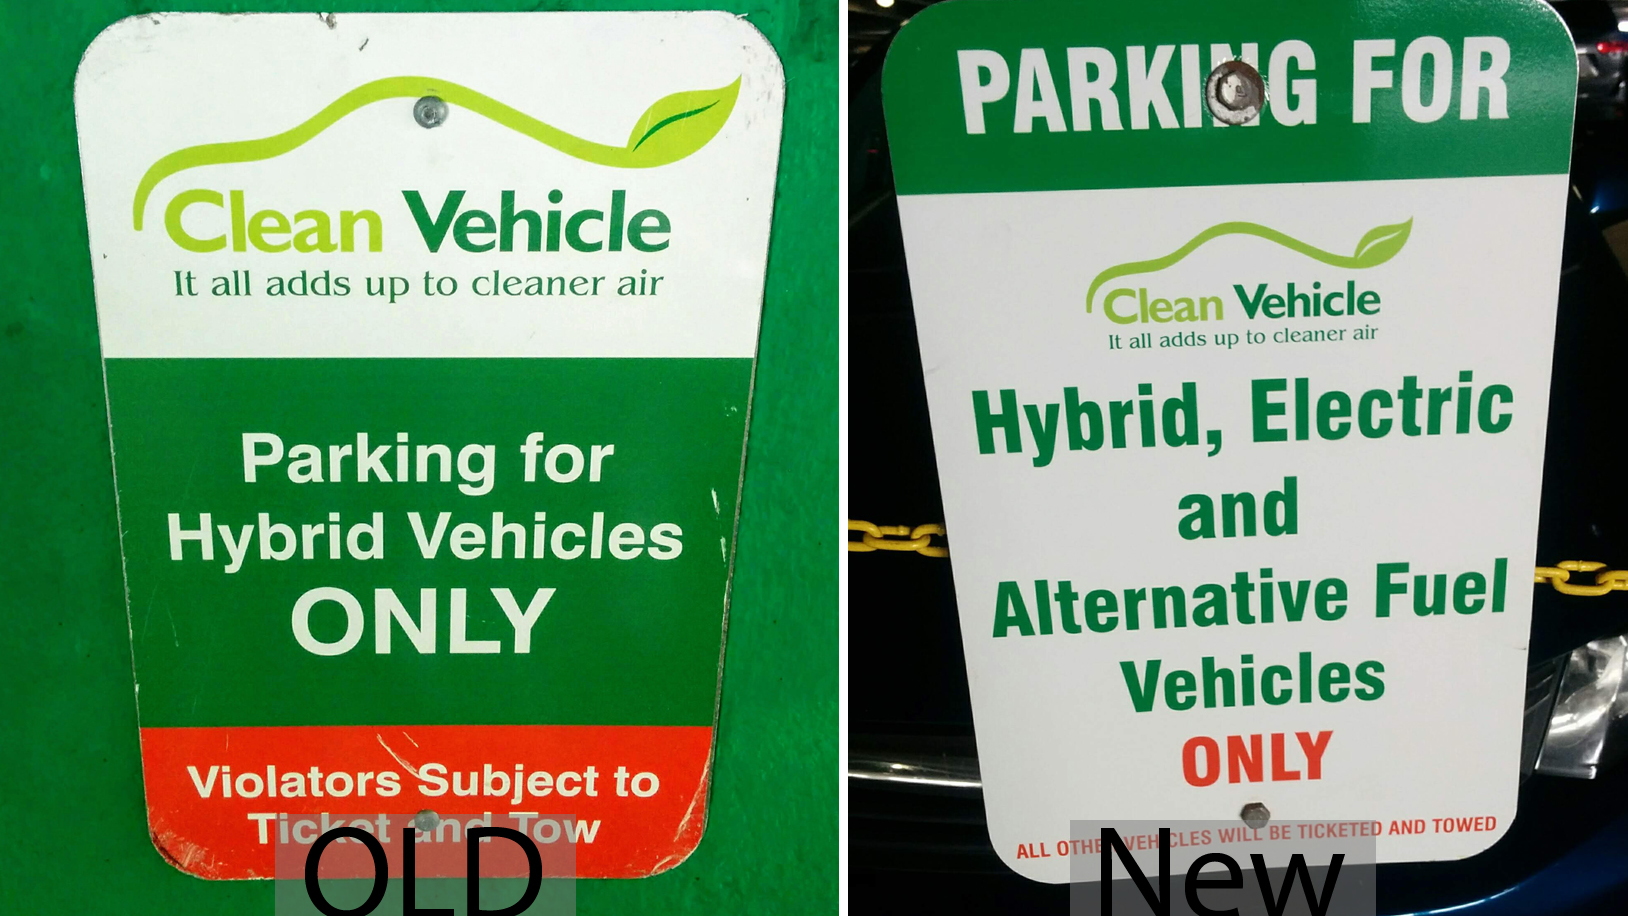 Massachusetts updates green-car parking signs at Logan Airport [CREDIT: JOHN BRIGGS]